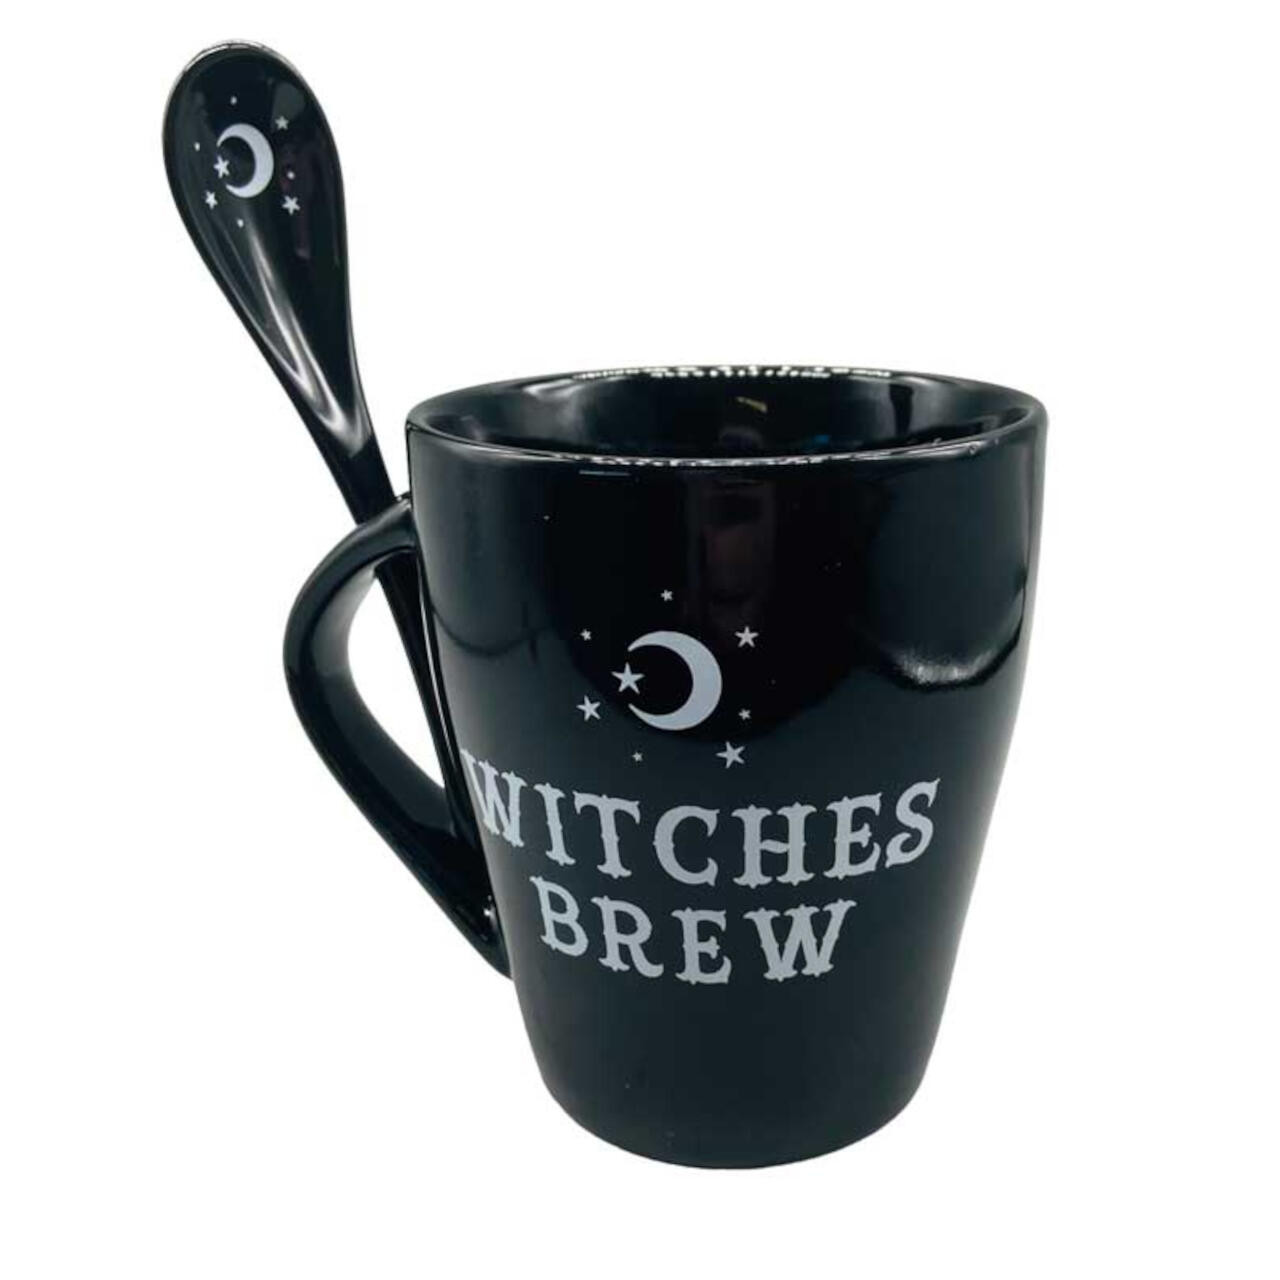 Witches Brew Black Mug & Spoon Set 4"